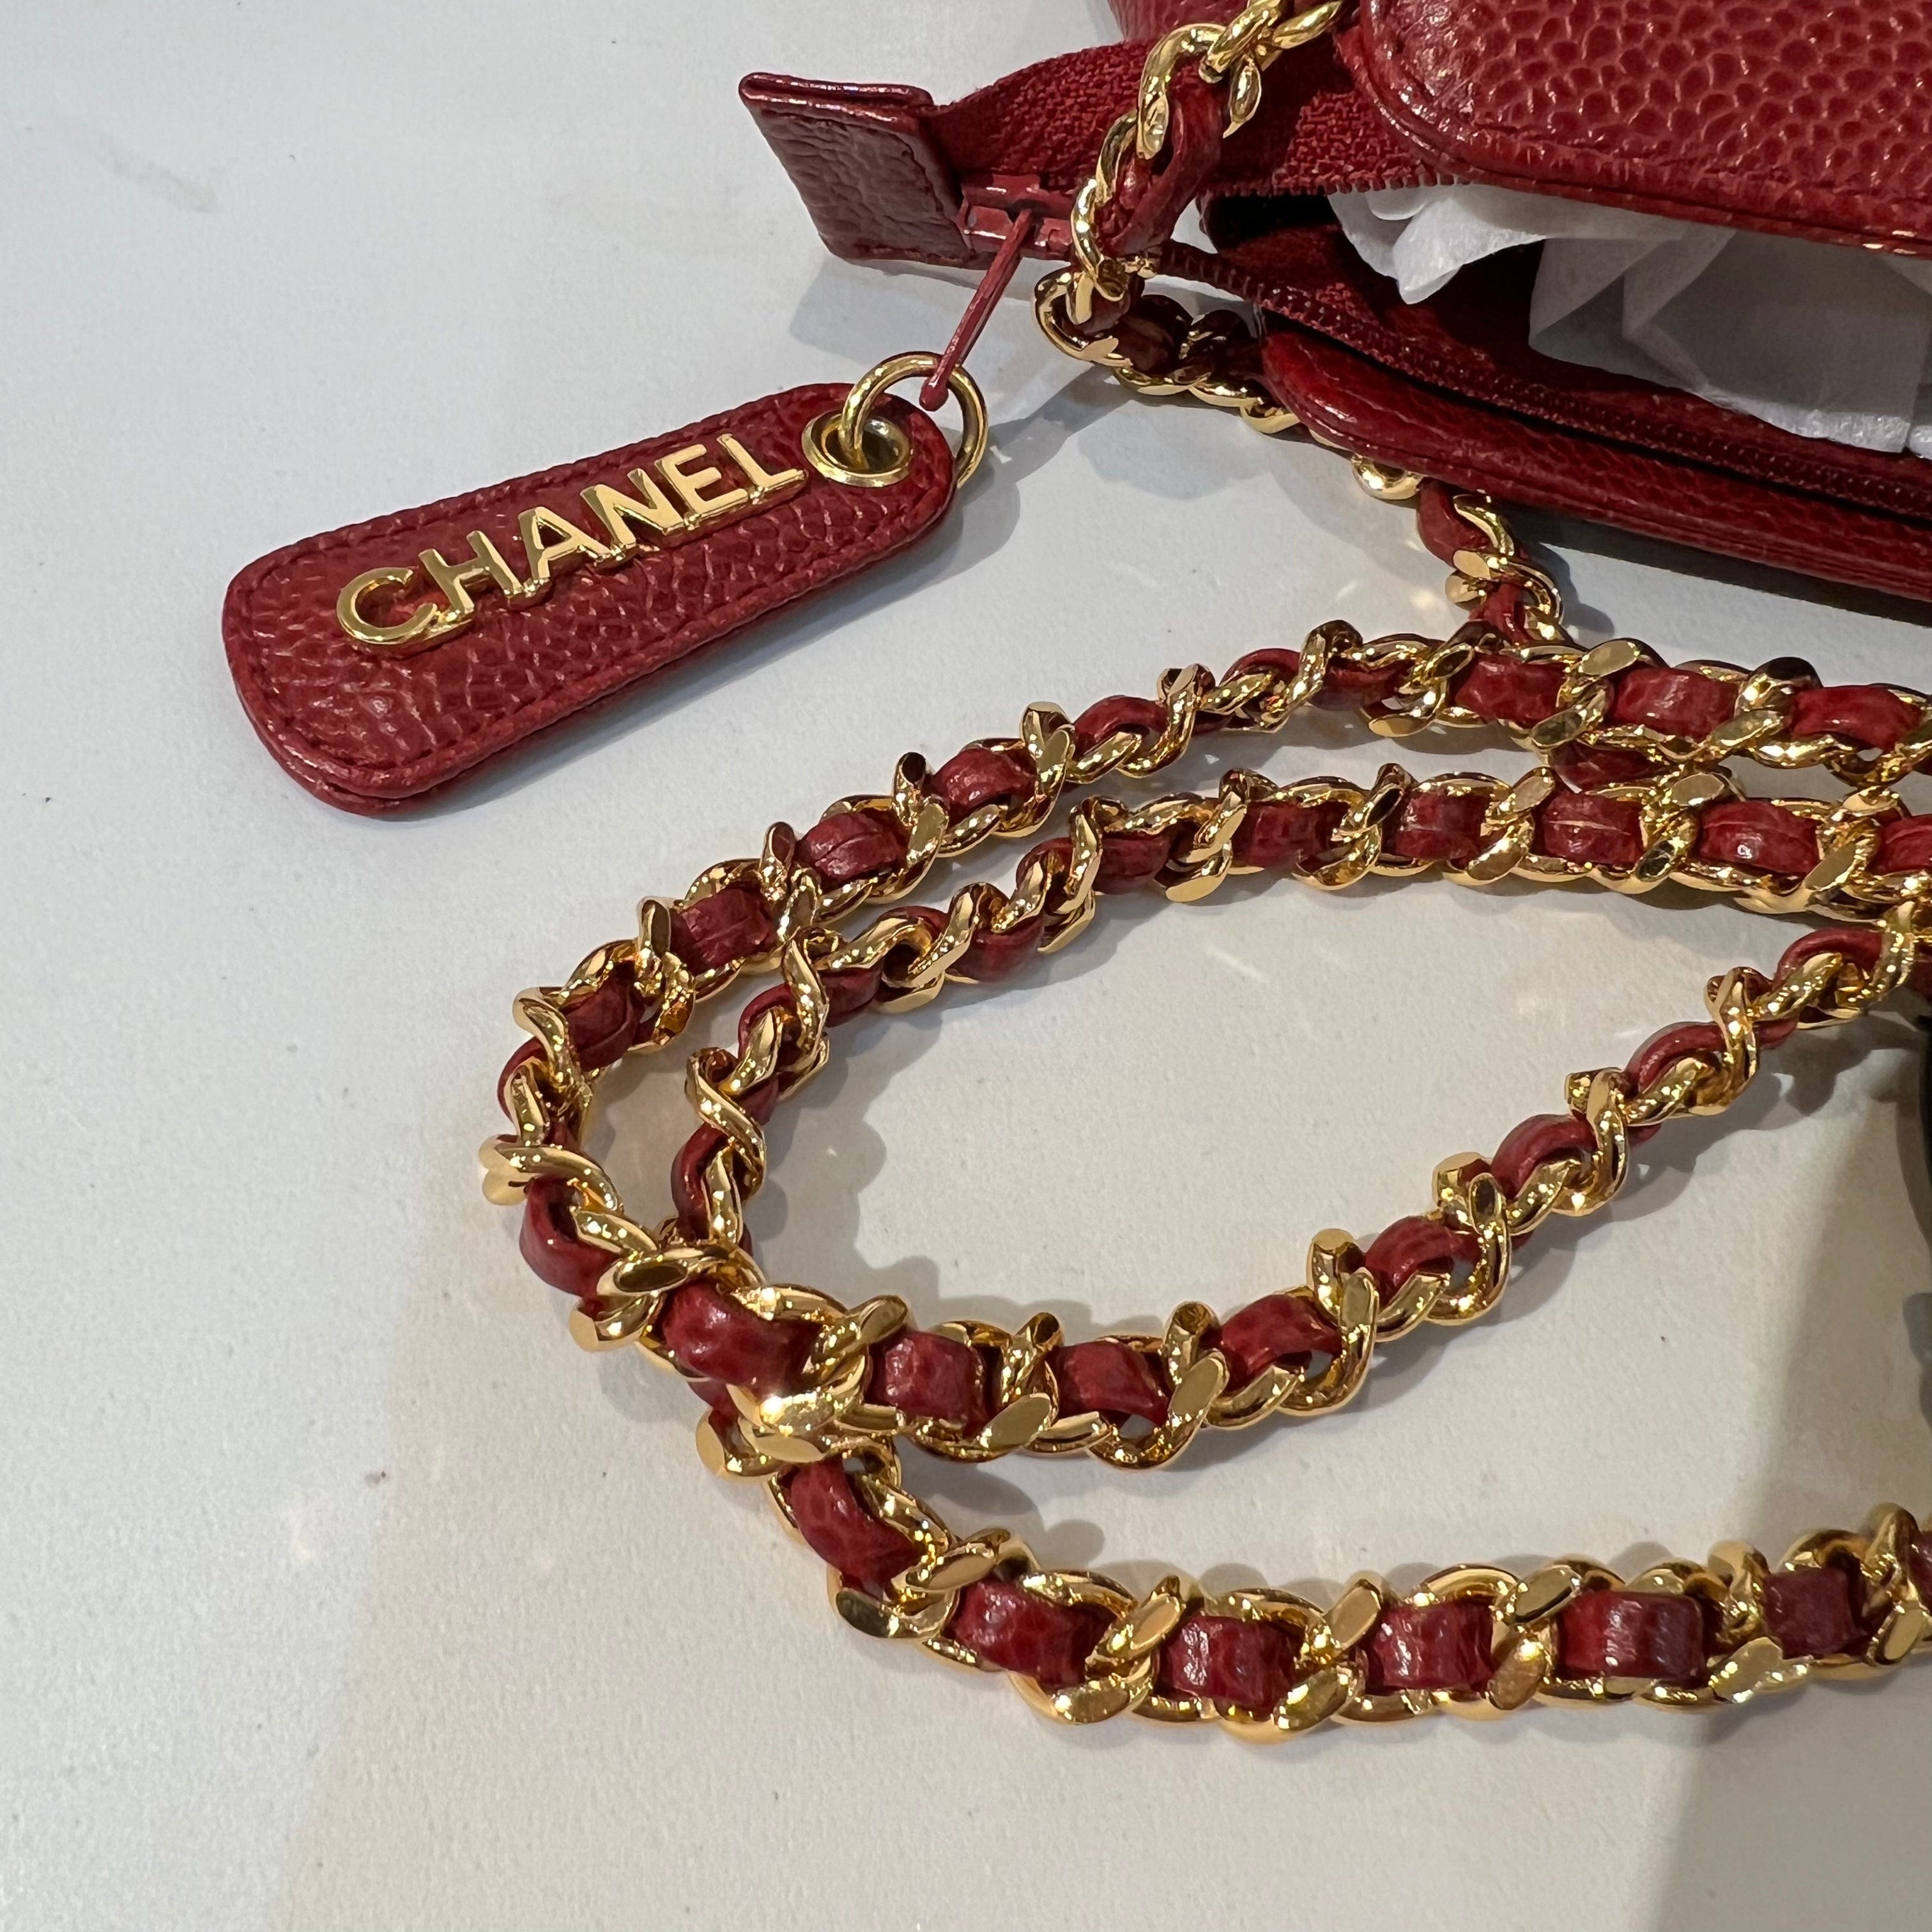 Chanel CHANEL  VINTAGE POUCH CHAIN SHOULDER BAG BURGUNDY 90195303